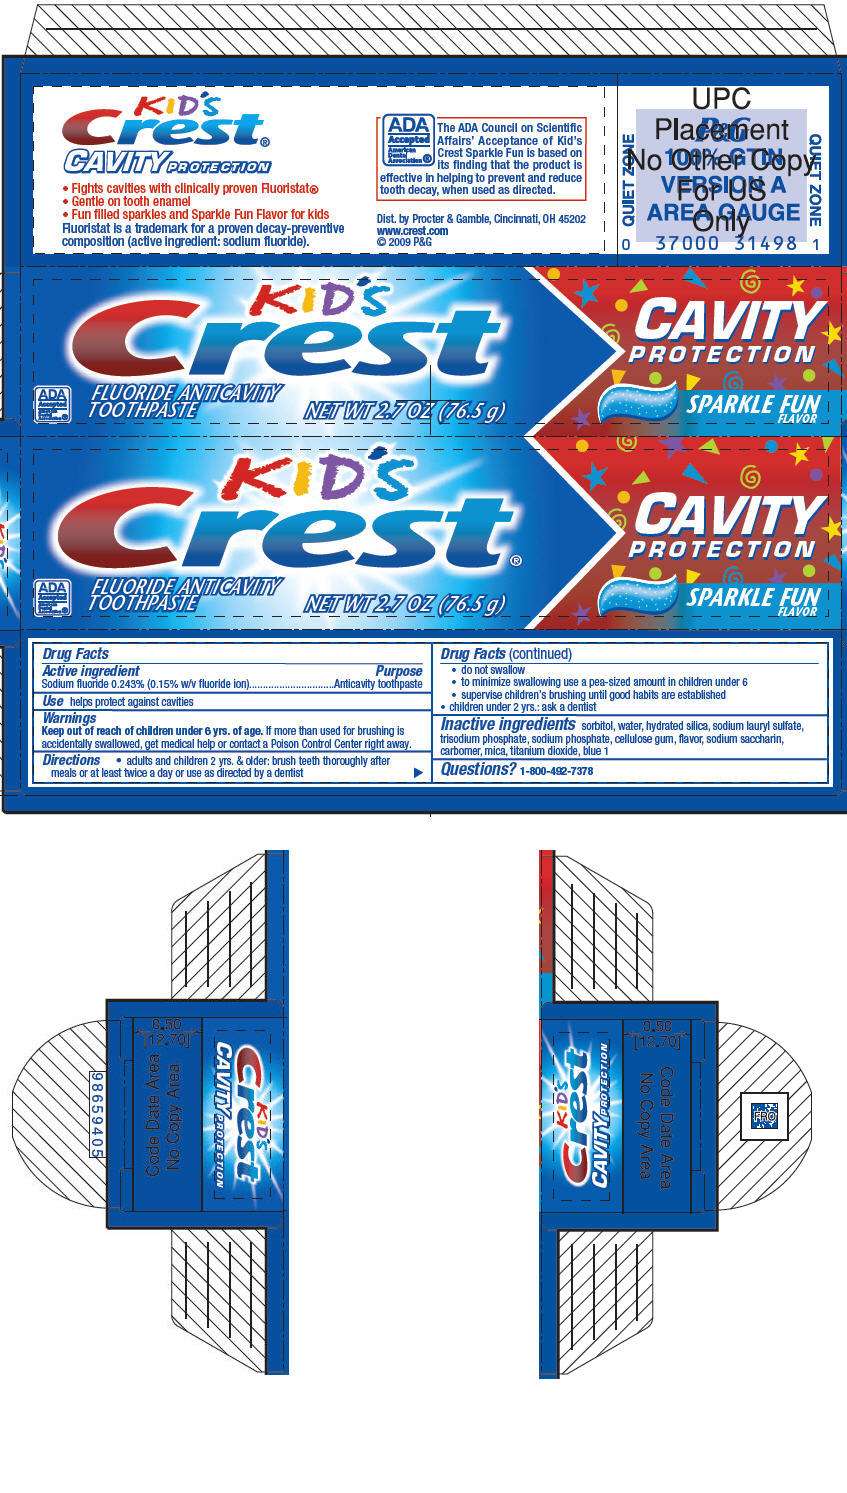 Kids Crest Cavity Protection